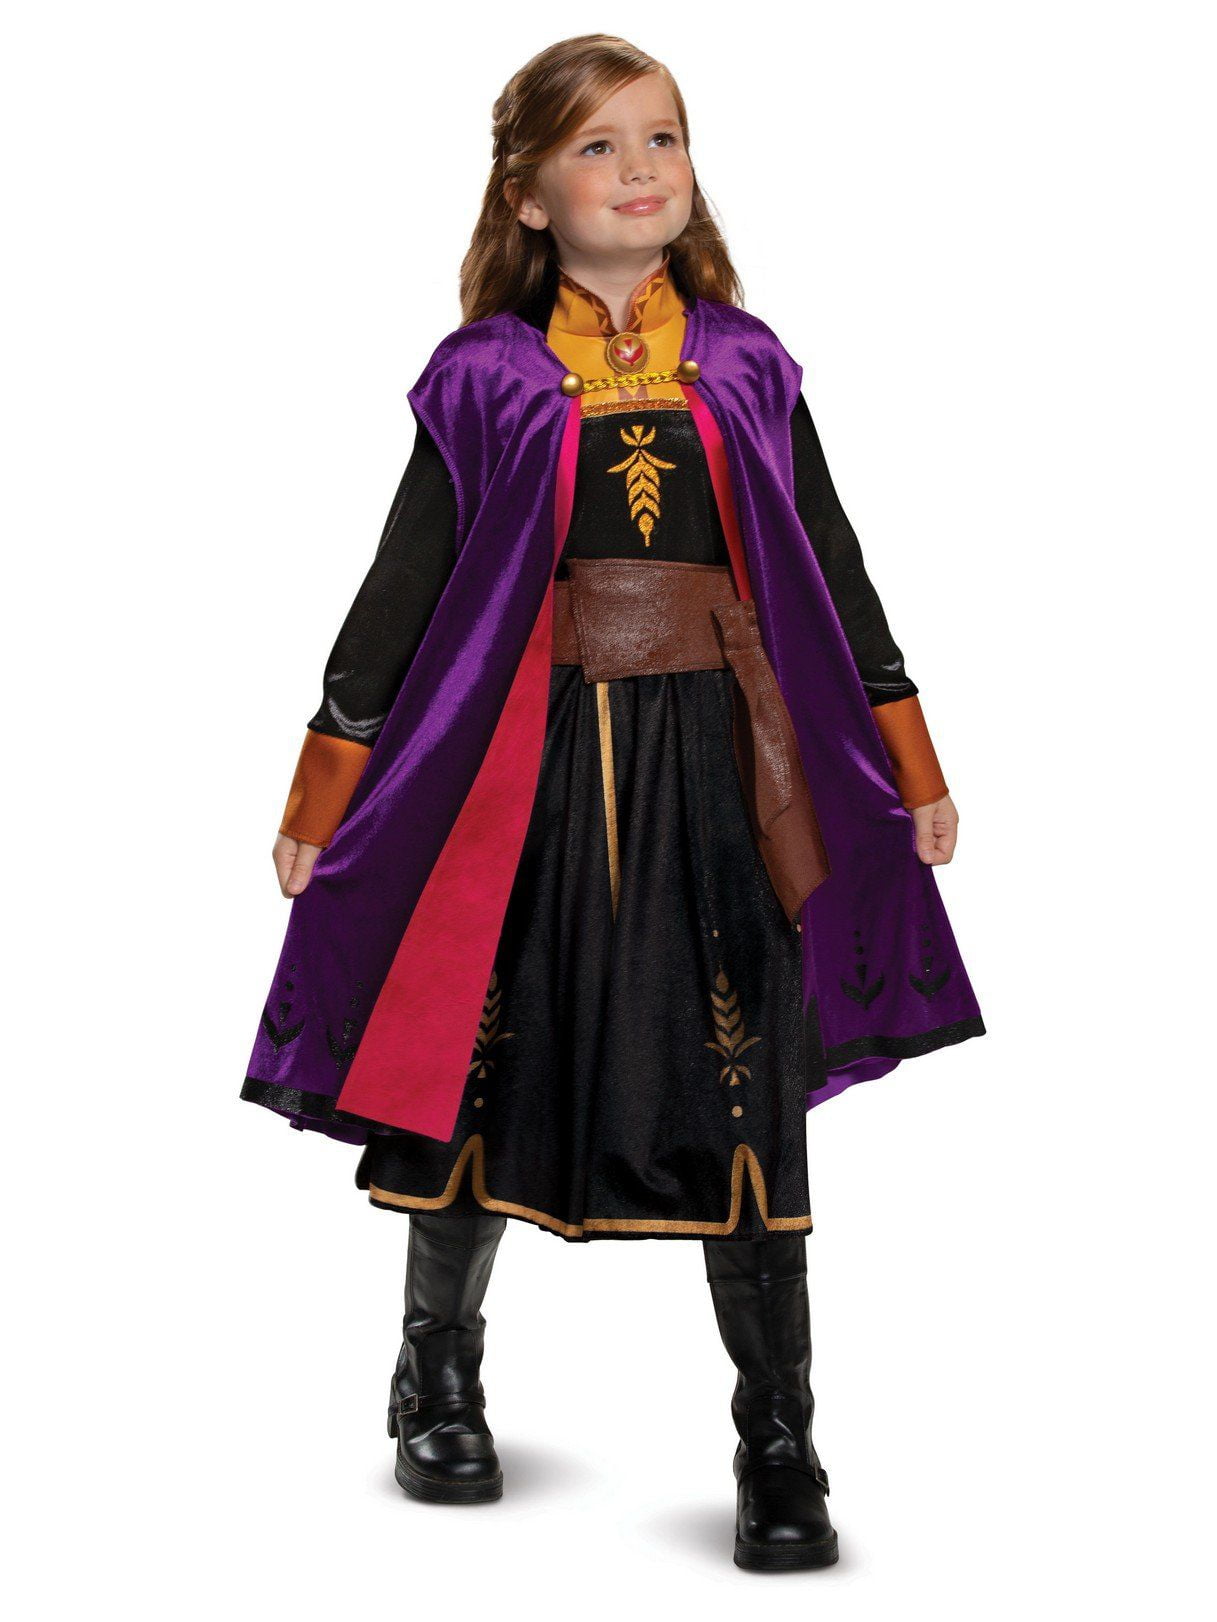 Anna Princess Fancy Dress Up Role Play Girls Costume New UK Stock 